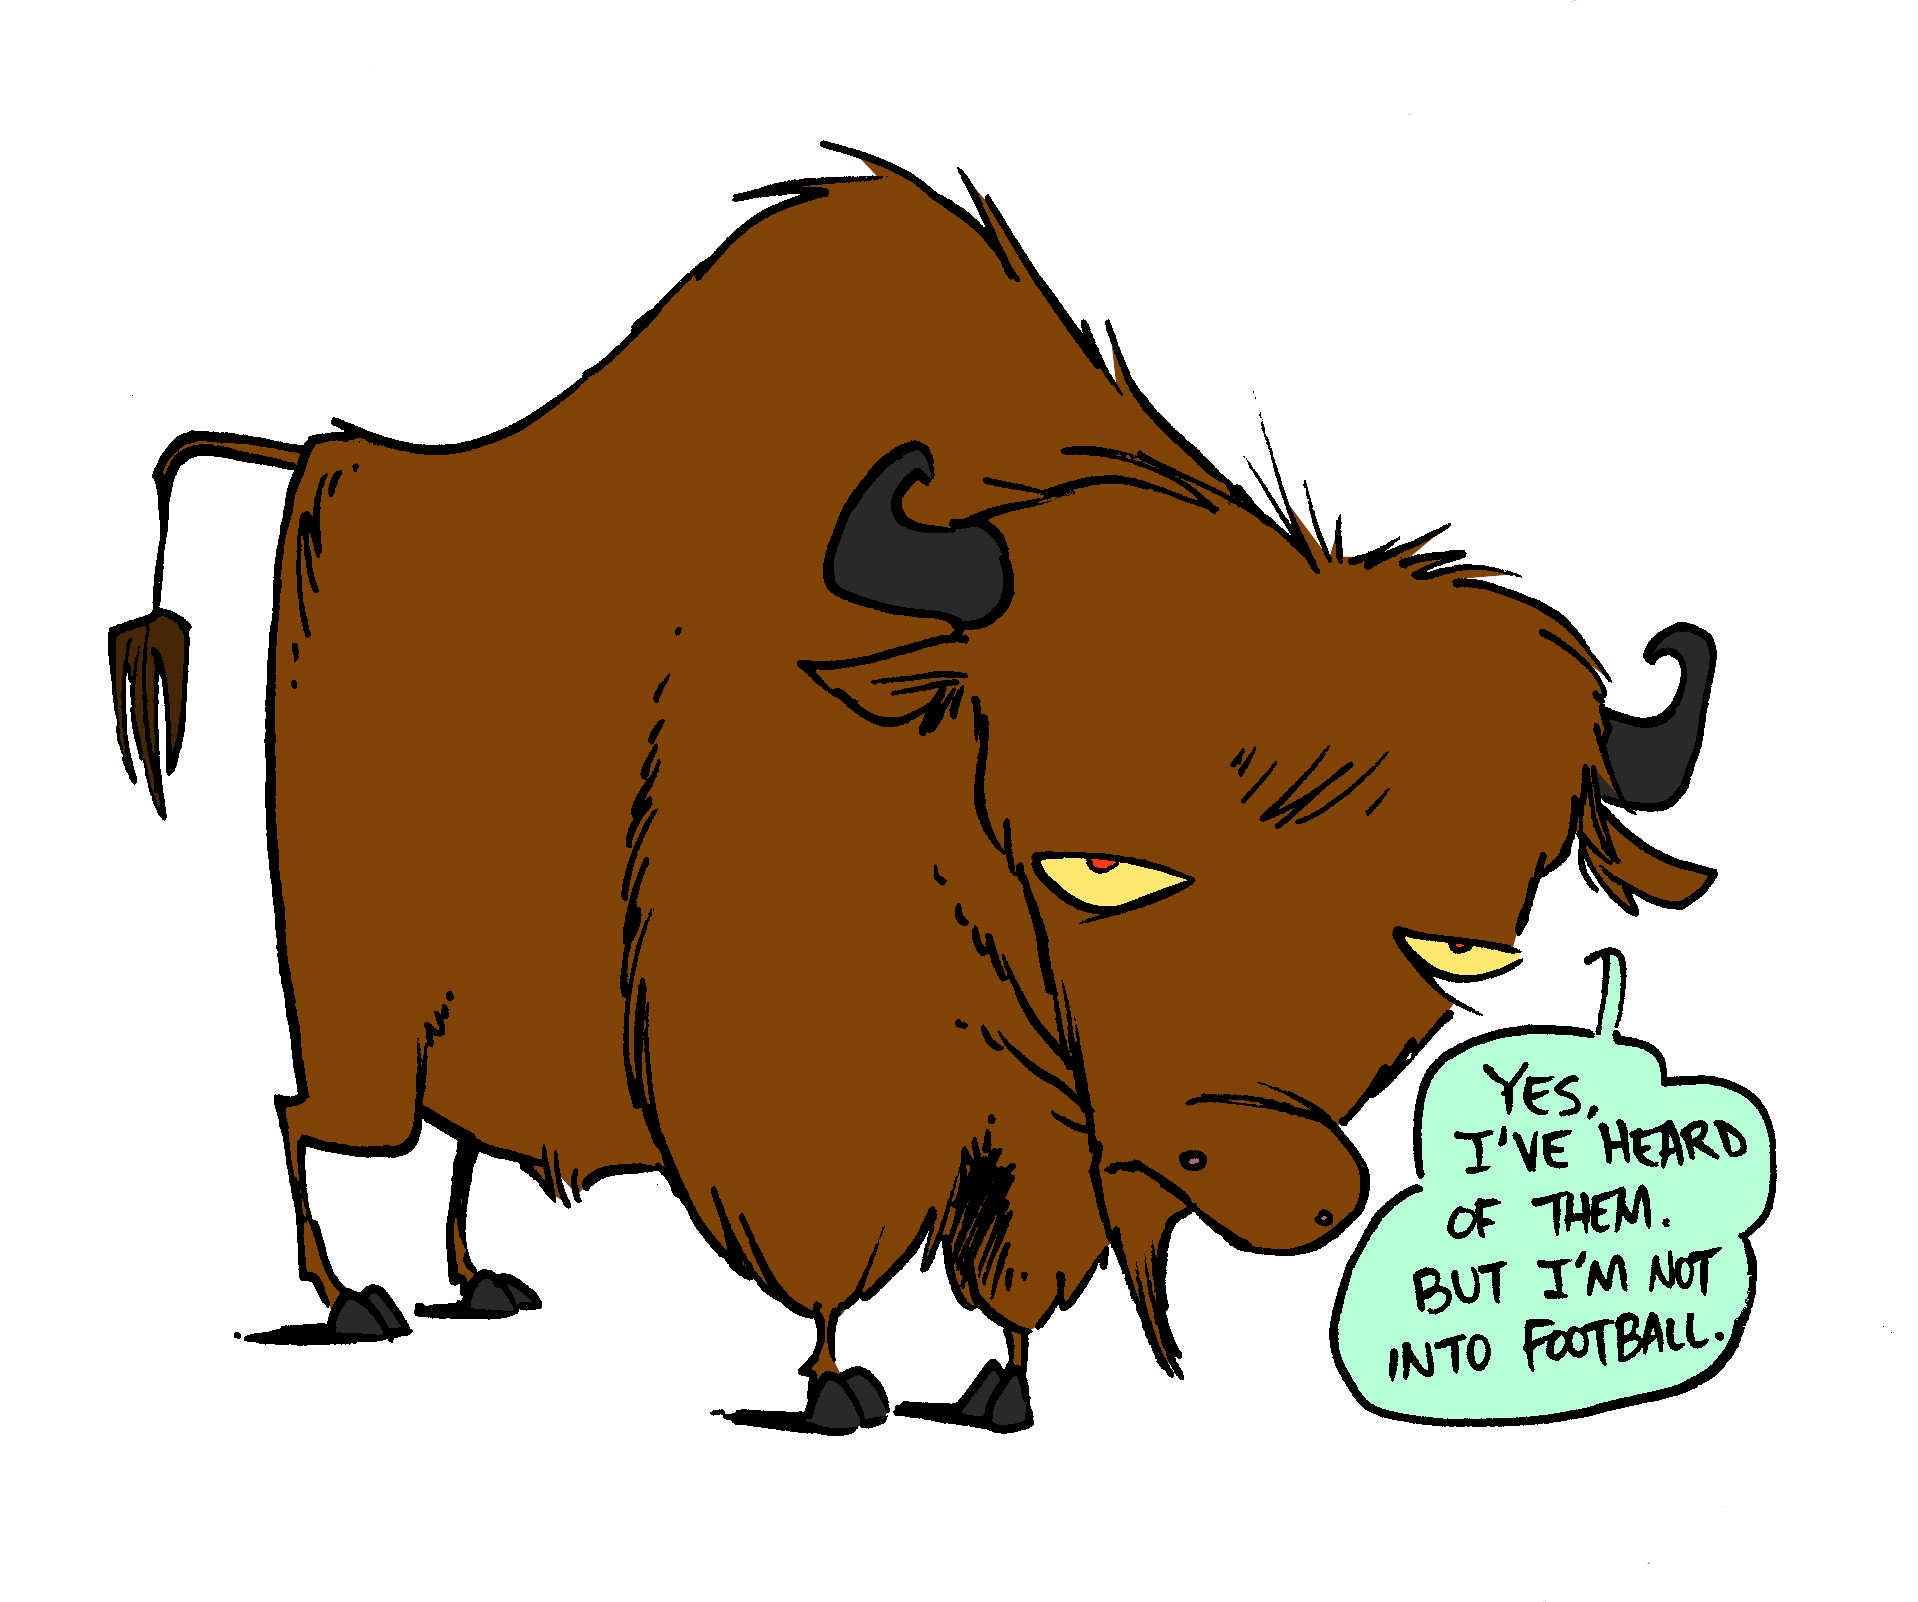 buffalo clipart comic